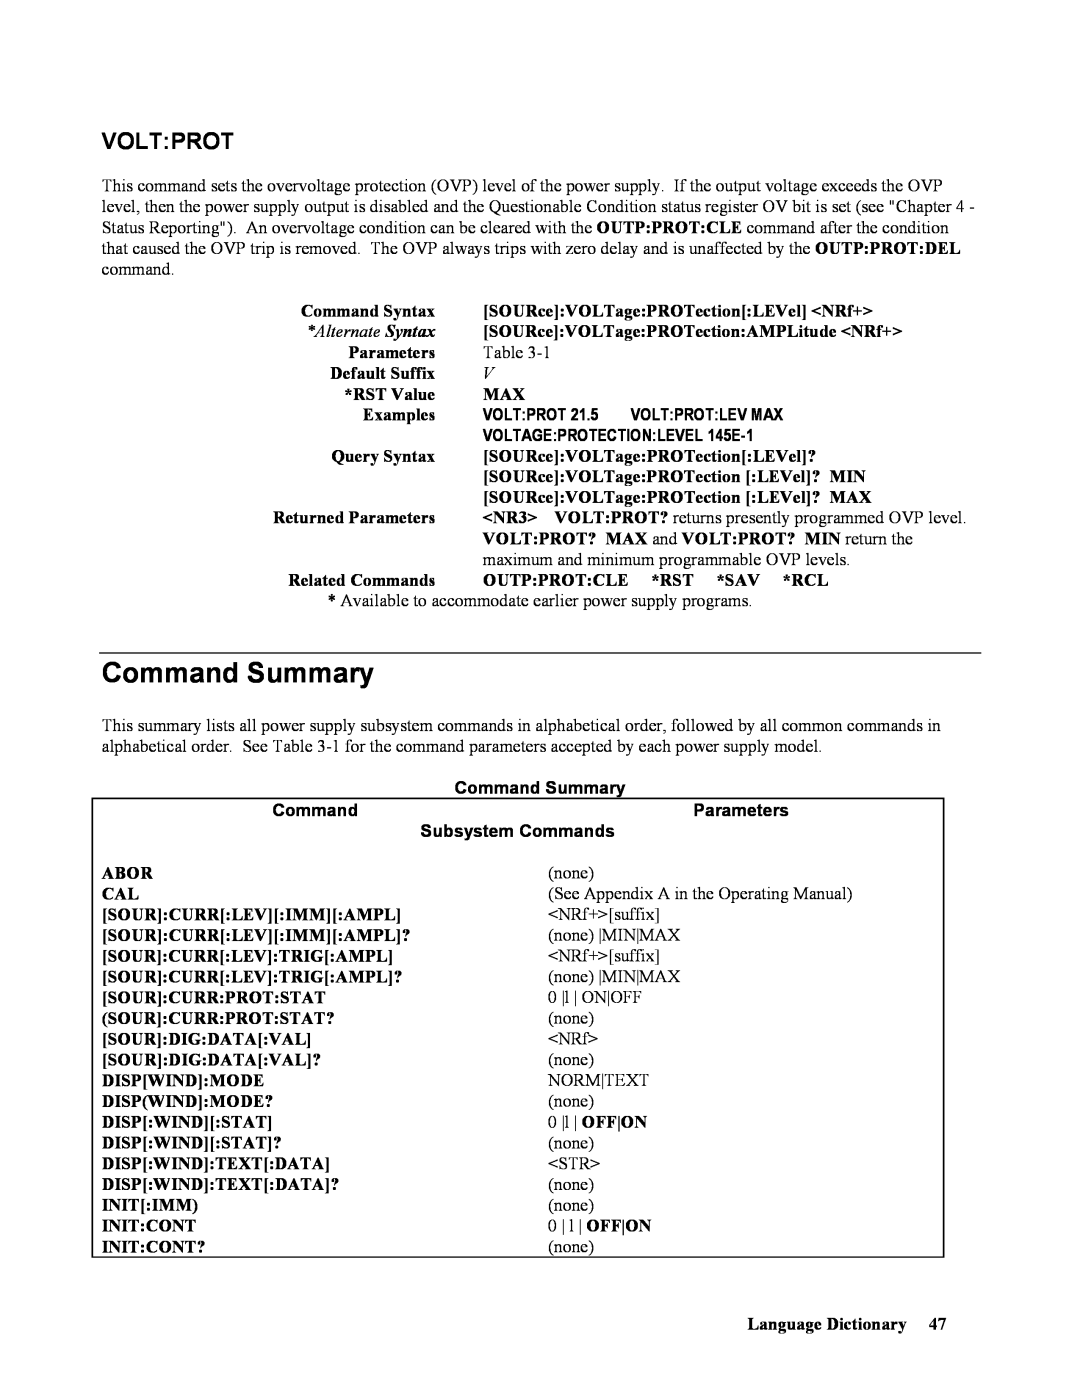 Agilent Technologies 664xA, 665xA, 667xA Command Summary, Alternate Syntax, Volt Prot, Volt:Prot:Lev Max, Parameters 